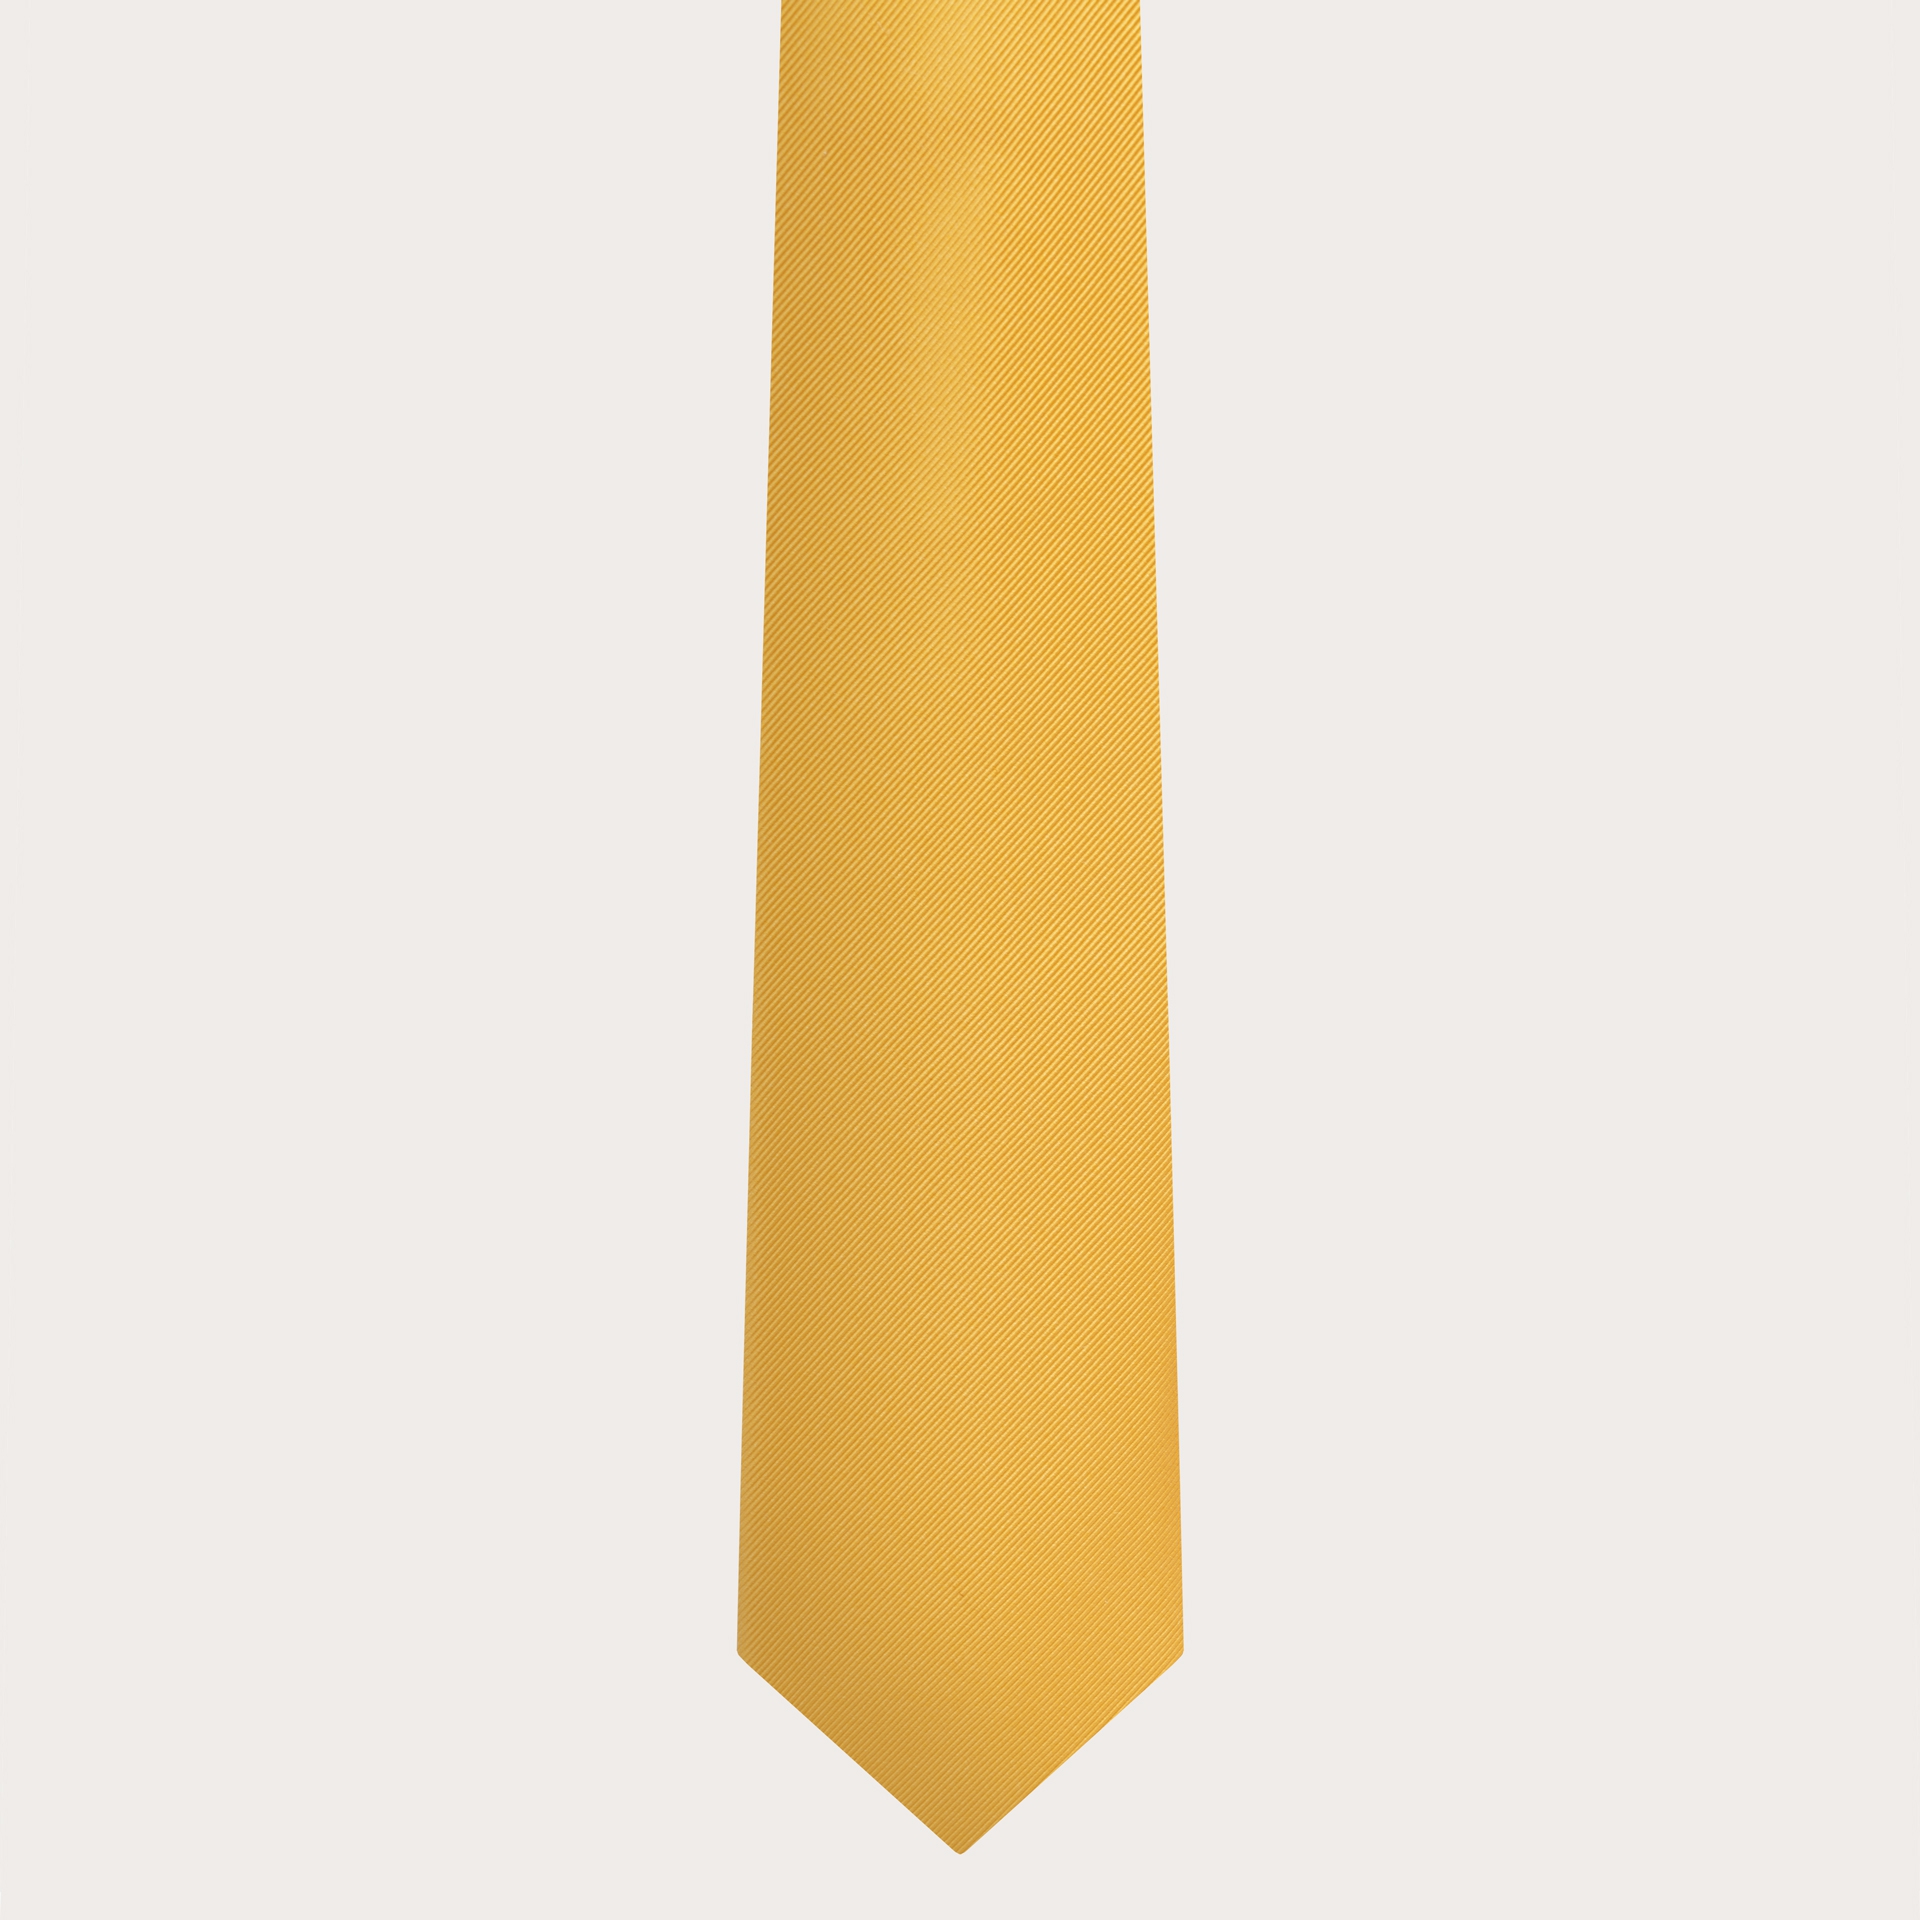 BRUCLE Corbata amarilla de seda jacquard